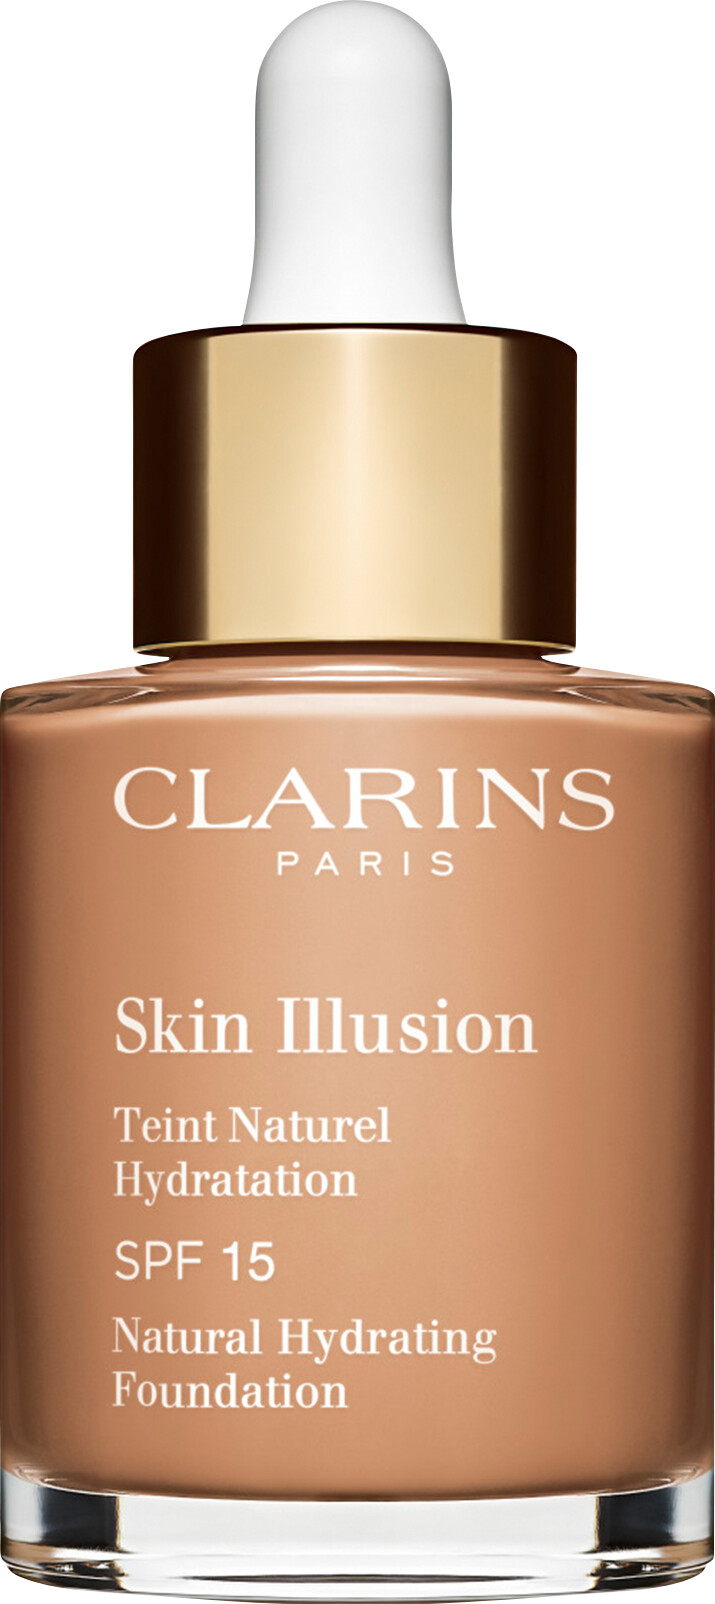 Clarins Skin Illusion Natural Hydrating Foundation SPF15 30ml 112 - Amber